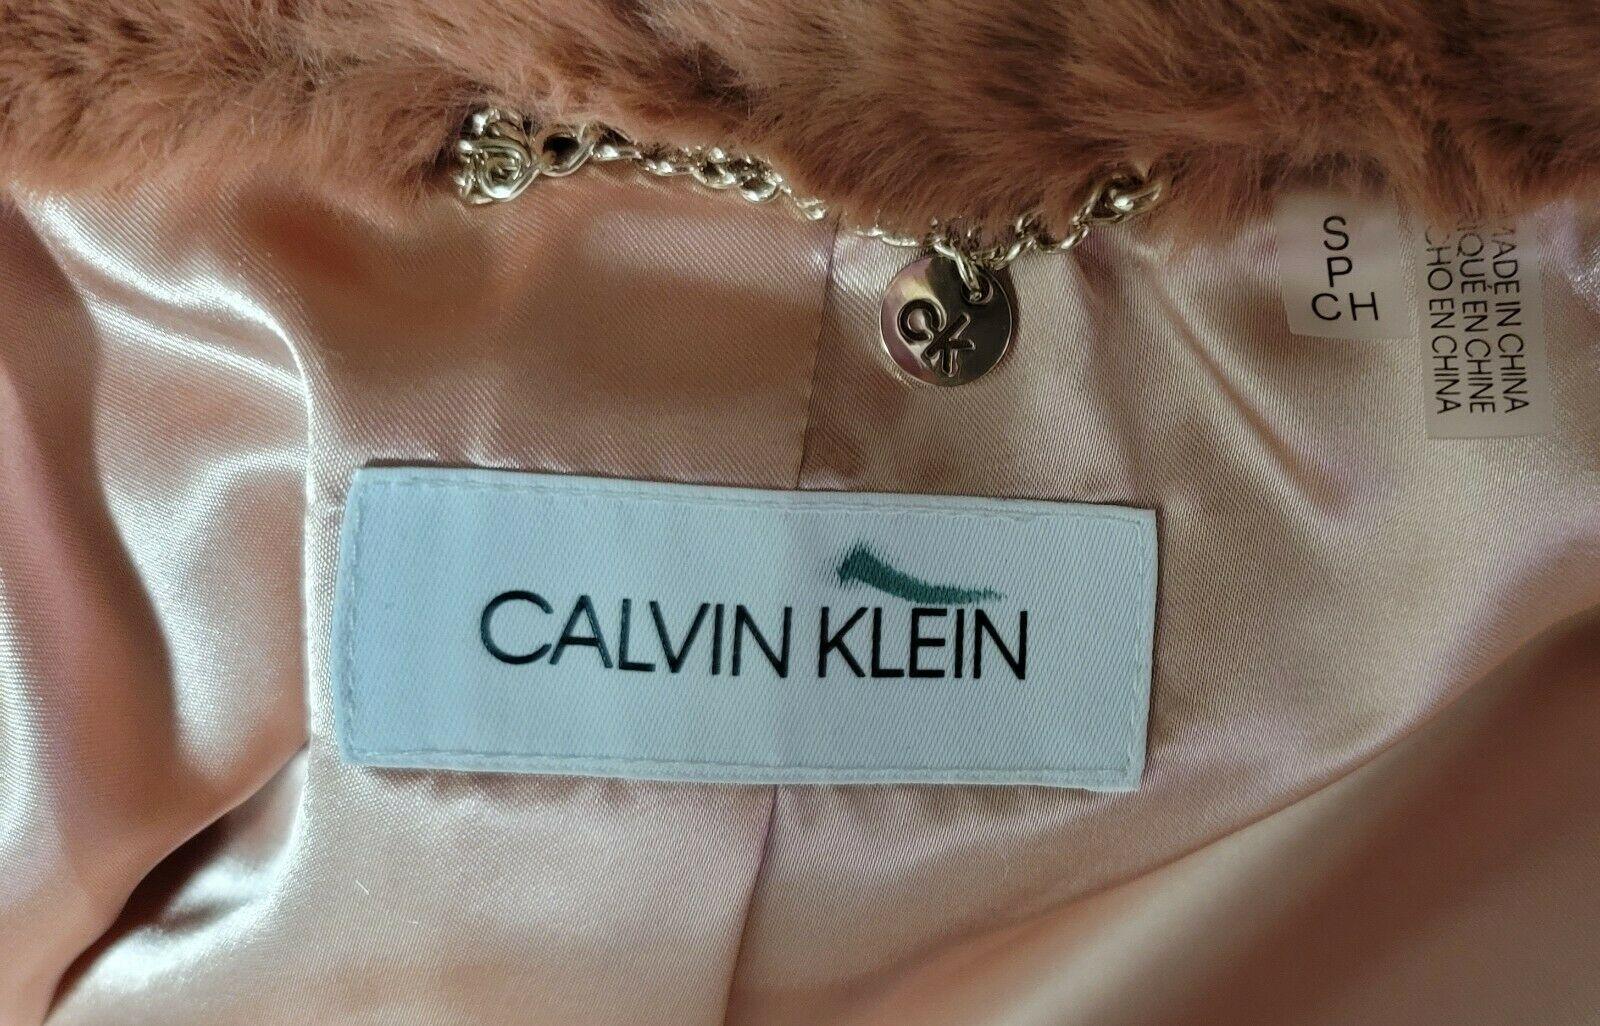 Calvin Klein Faux-Fur Zip-Front Coat Jacket Dusty Rose Size S - SVNYFancy